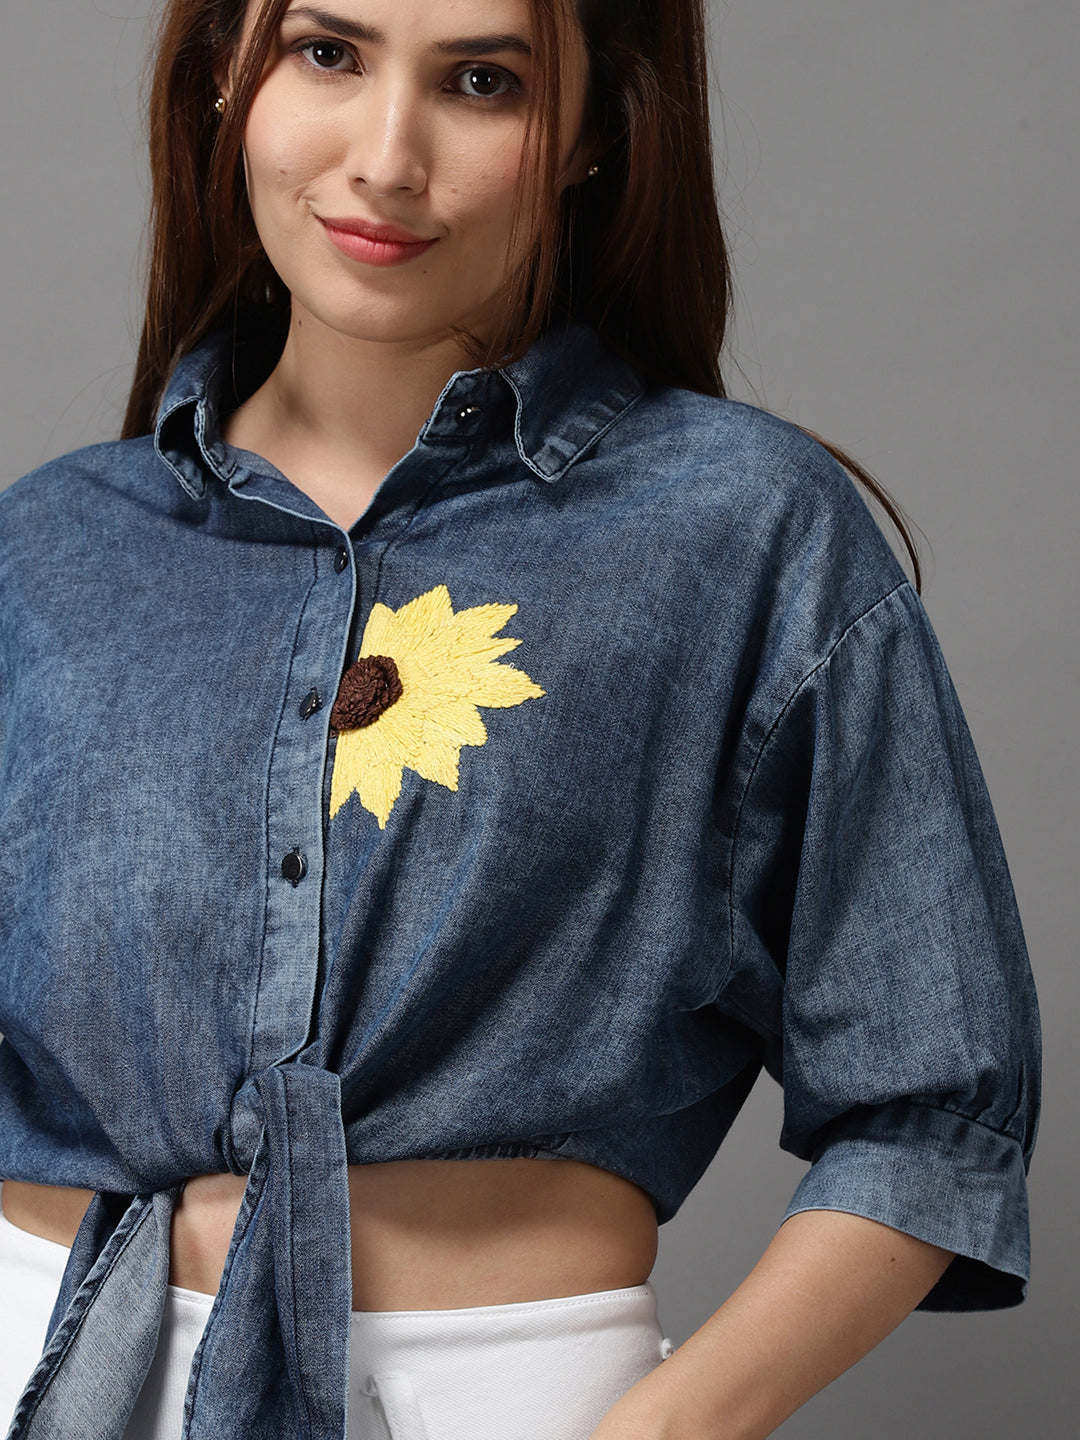 Women Shirt Collar Embroidered Blue Shirt Style Top